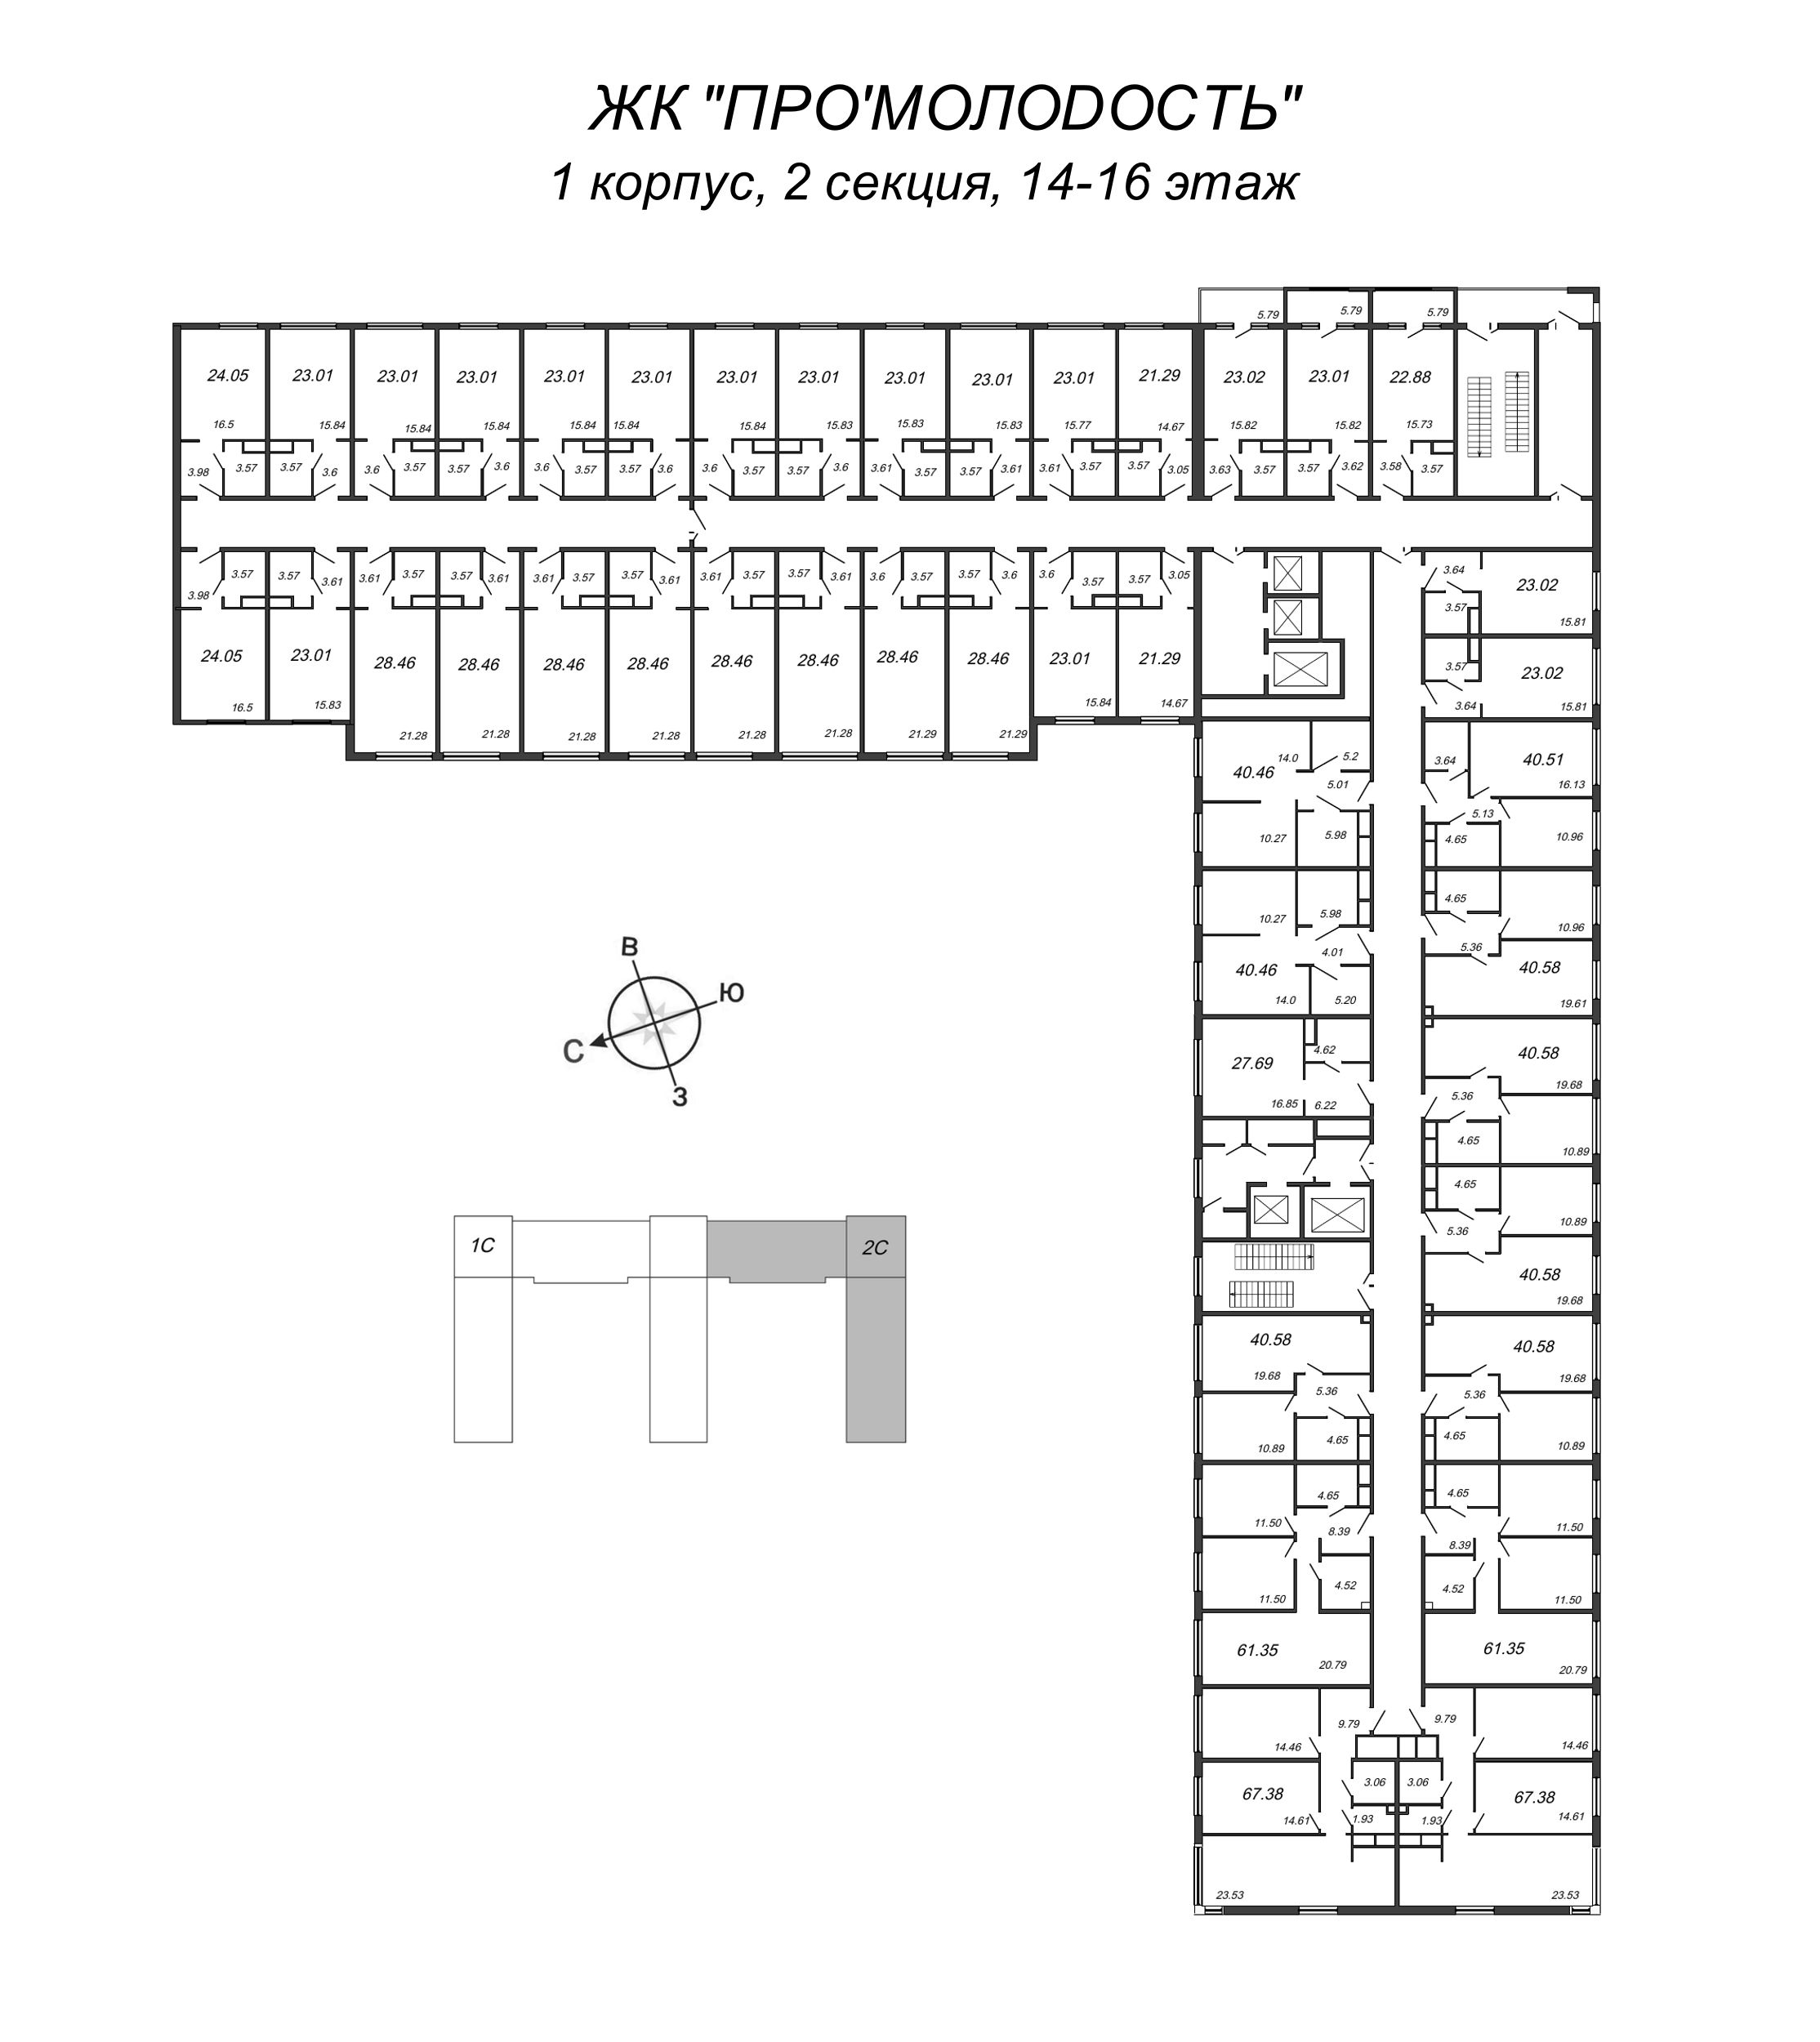 2-комнатная (Евро) квартира, 40.58 м² - планировка этажа